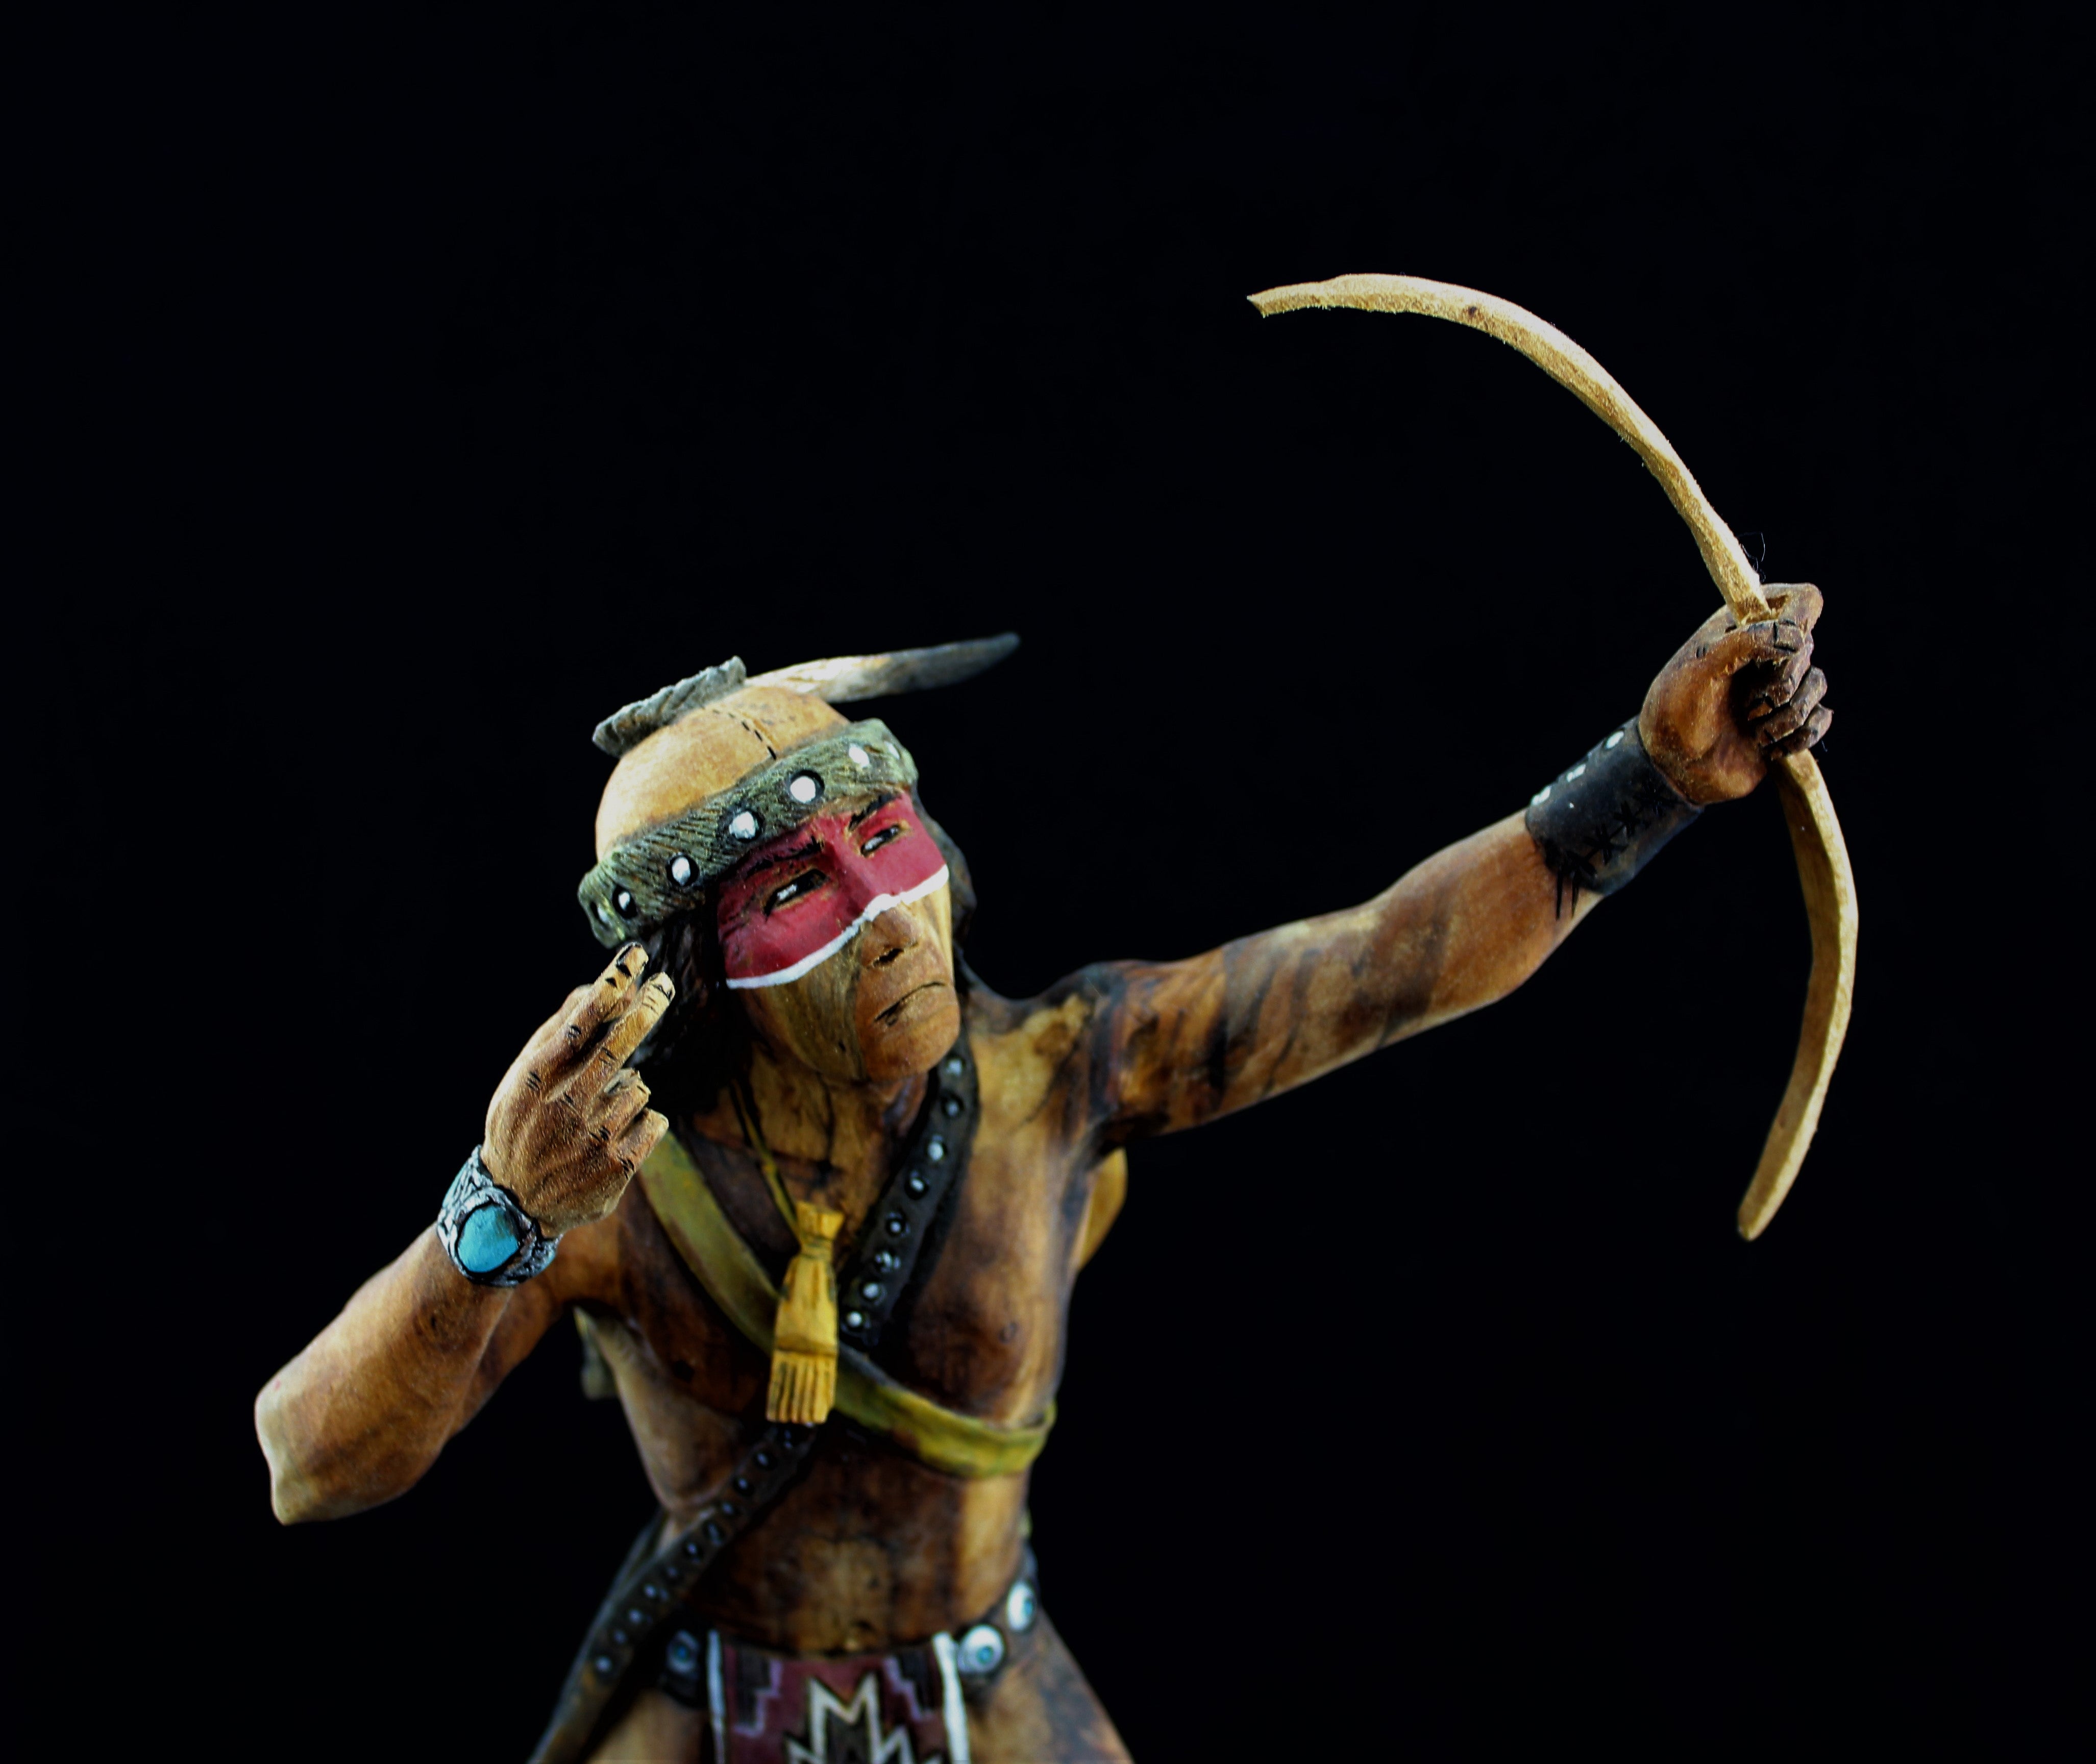 Raymond Chee Navajo Warrior Sculpture